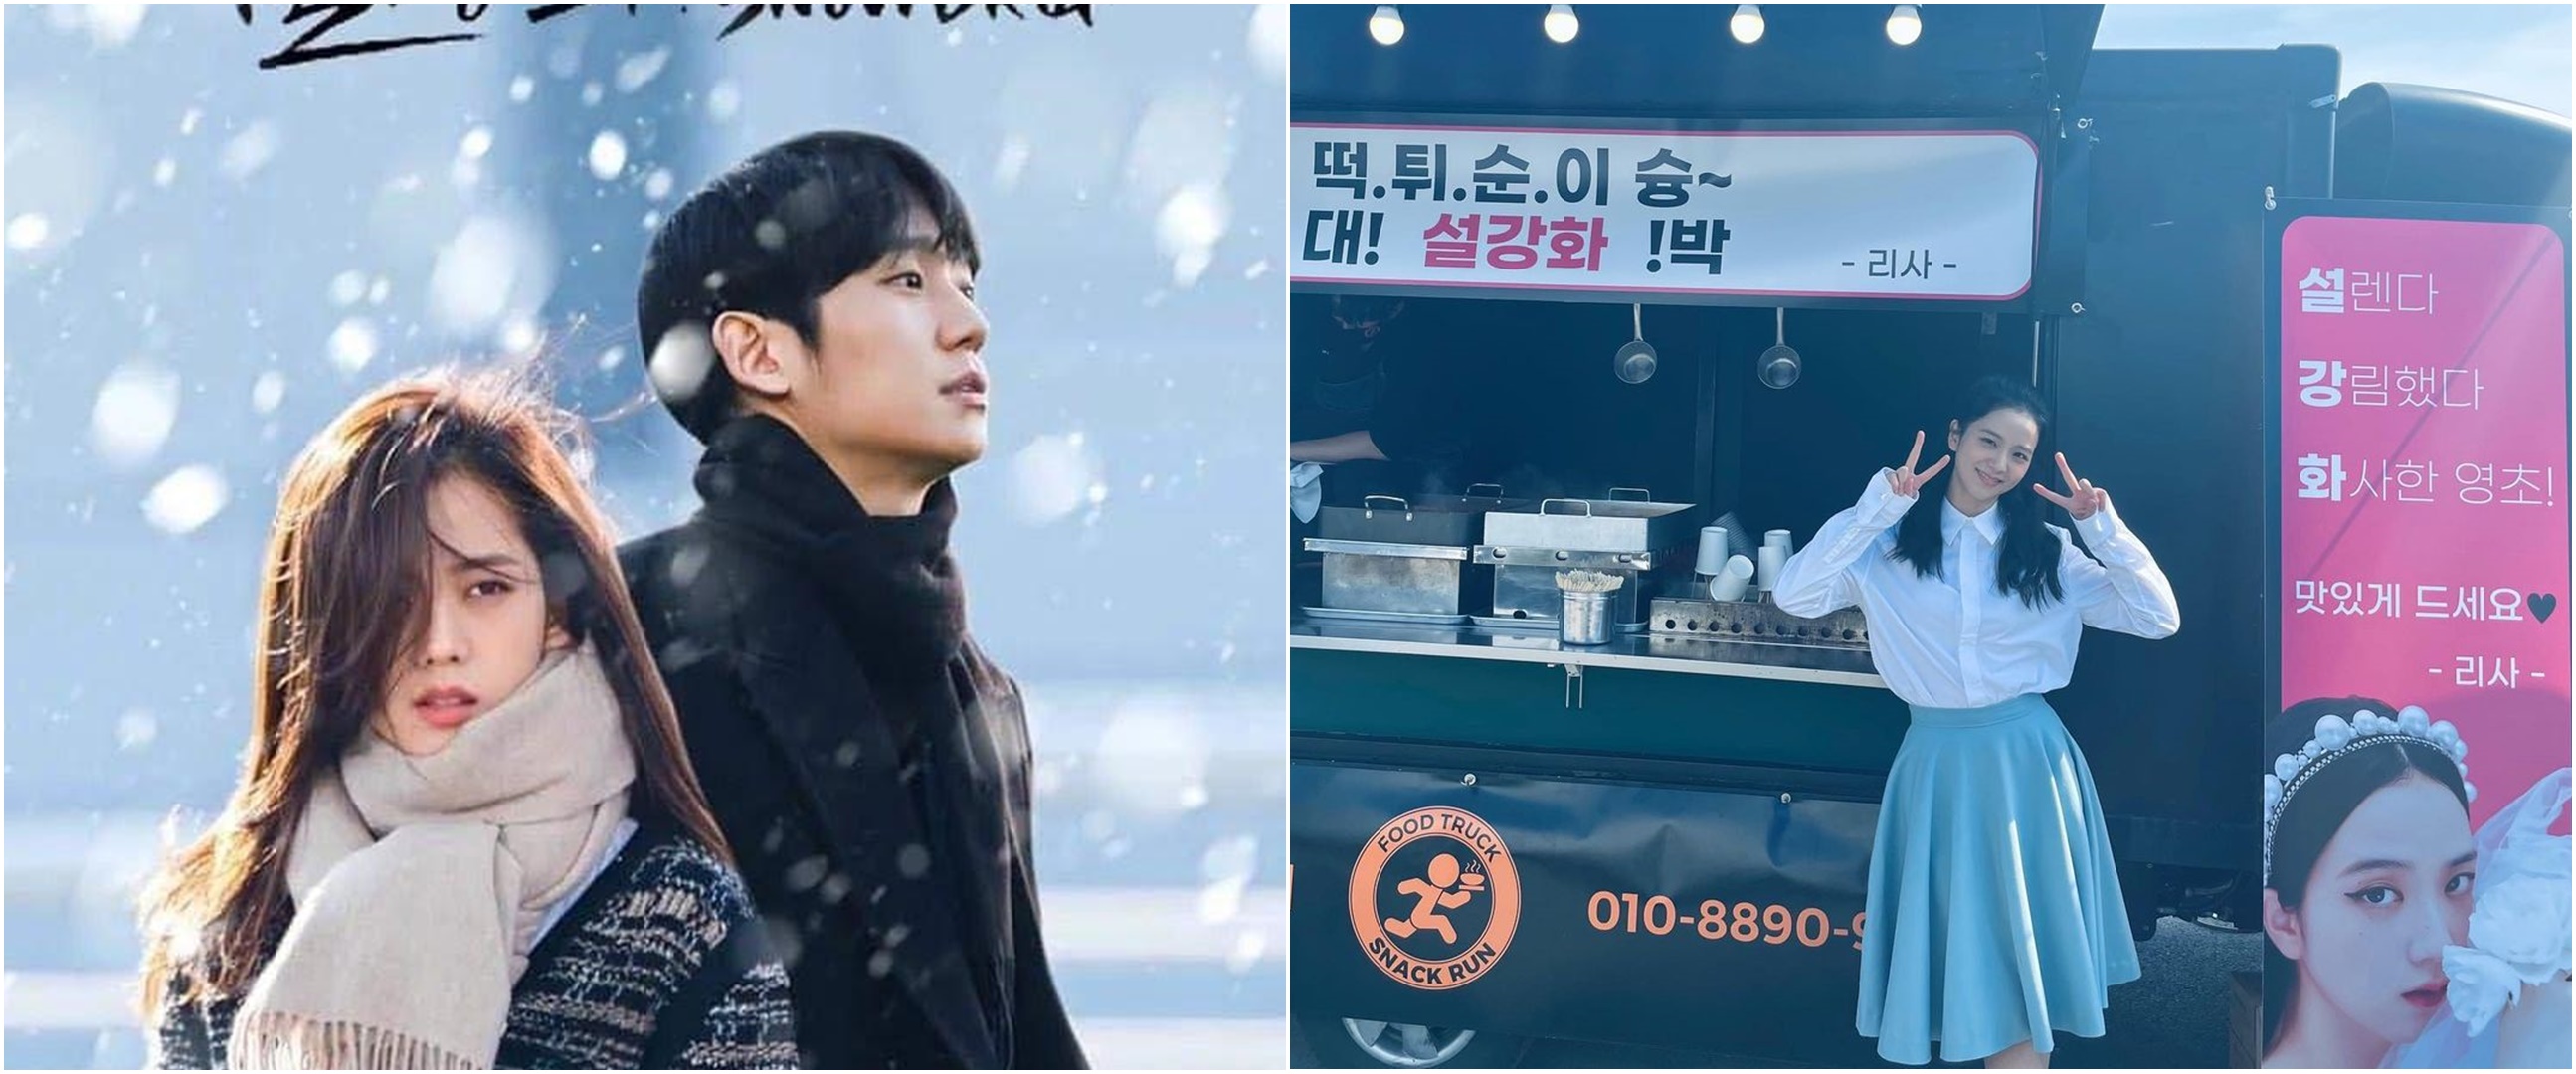 Sinopsis drama Korea Snowdrop debut Jisoo Blackpink jadi pemeran utama